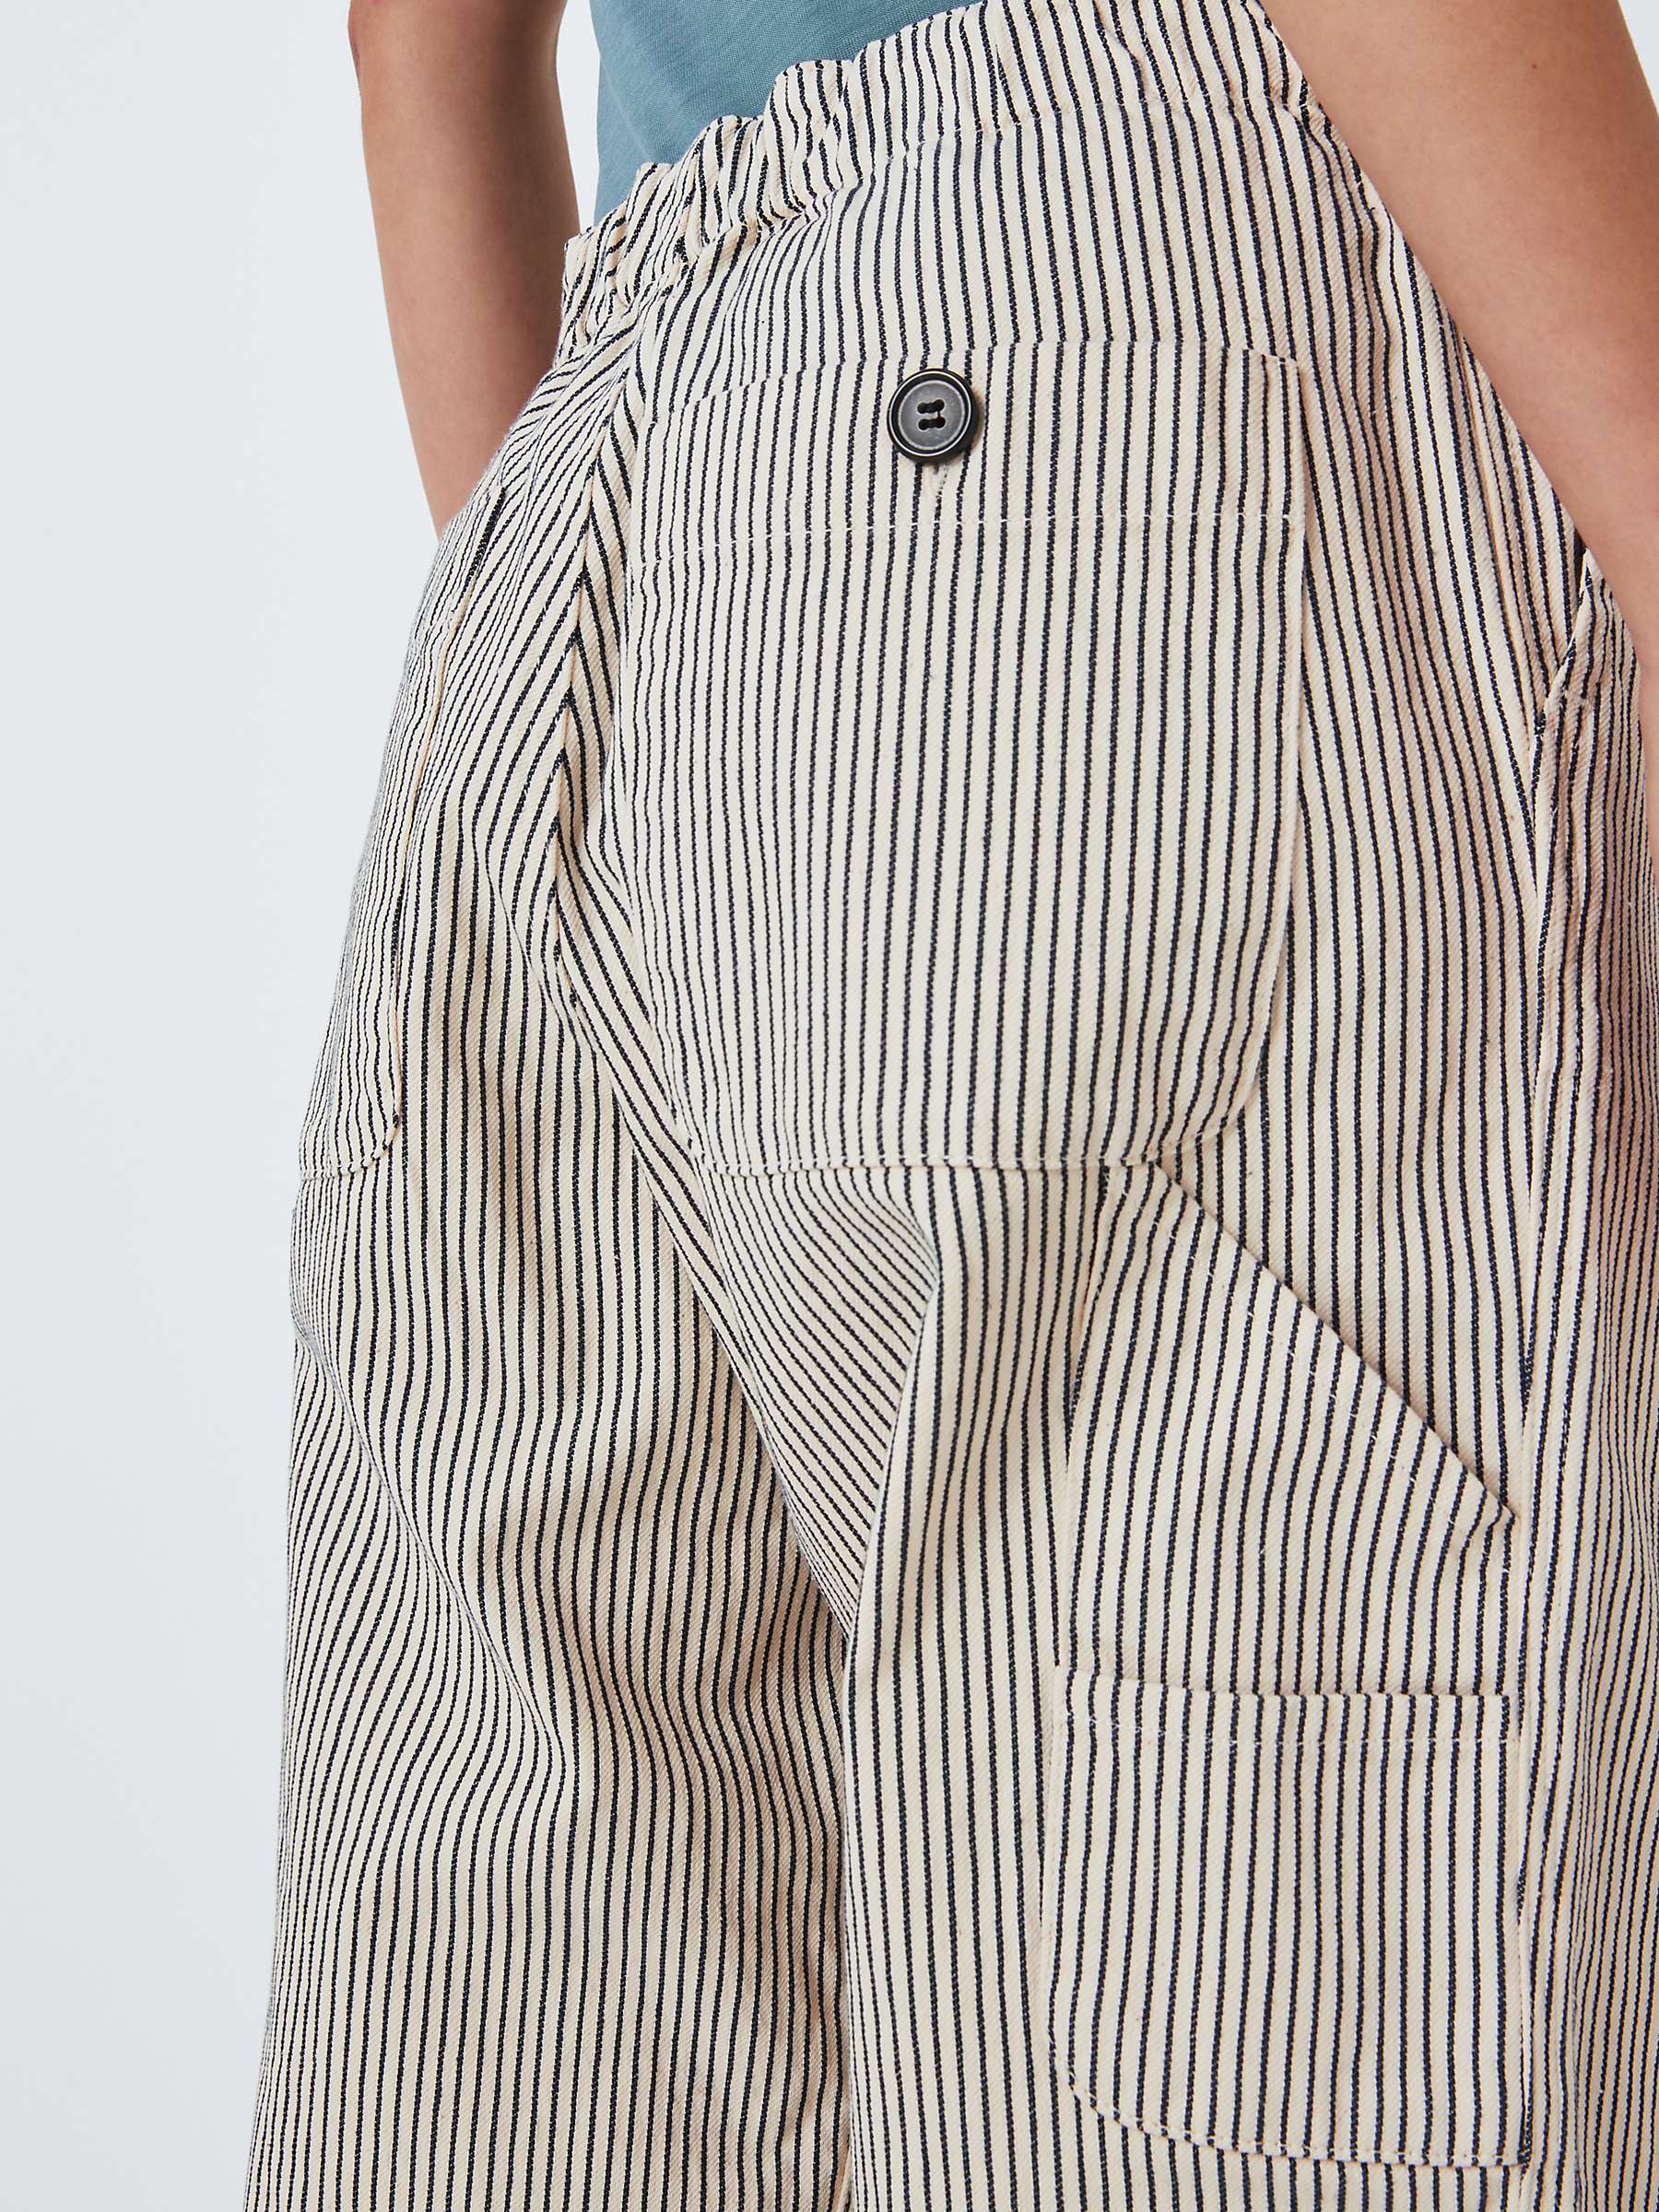 Buy Leon & Harper Armina Stripe Trousers, Ecru Online at johnlewis.com